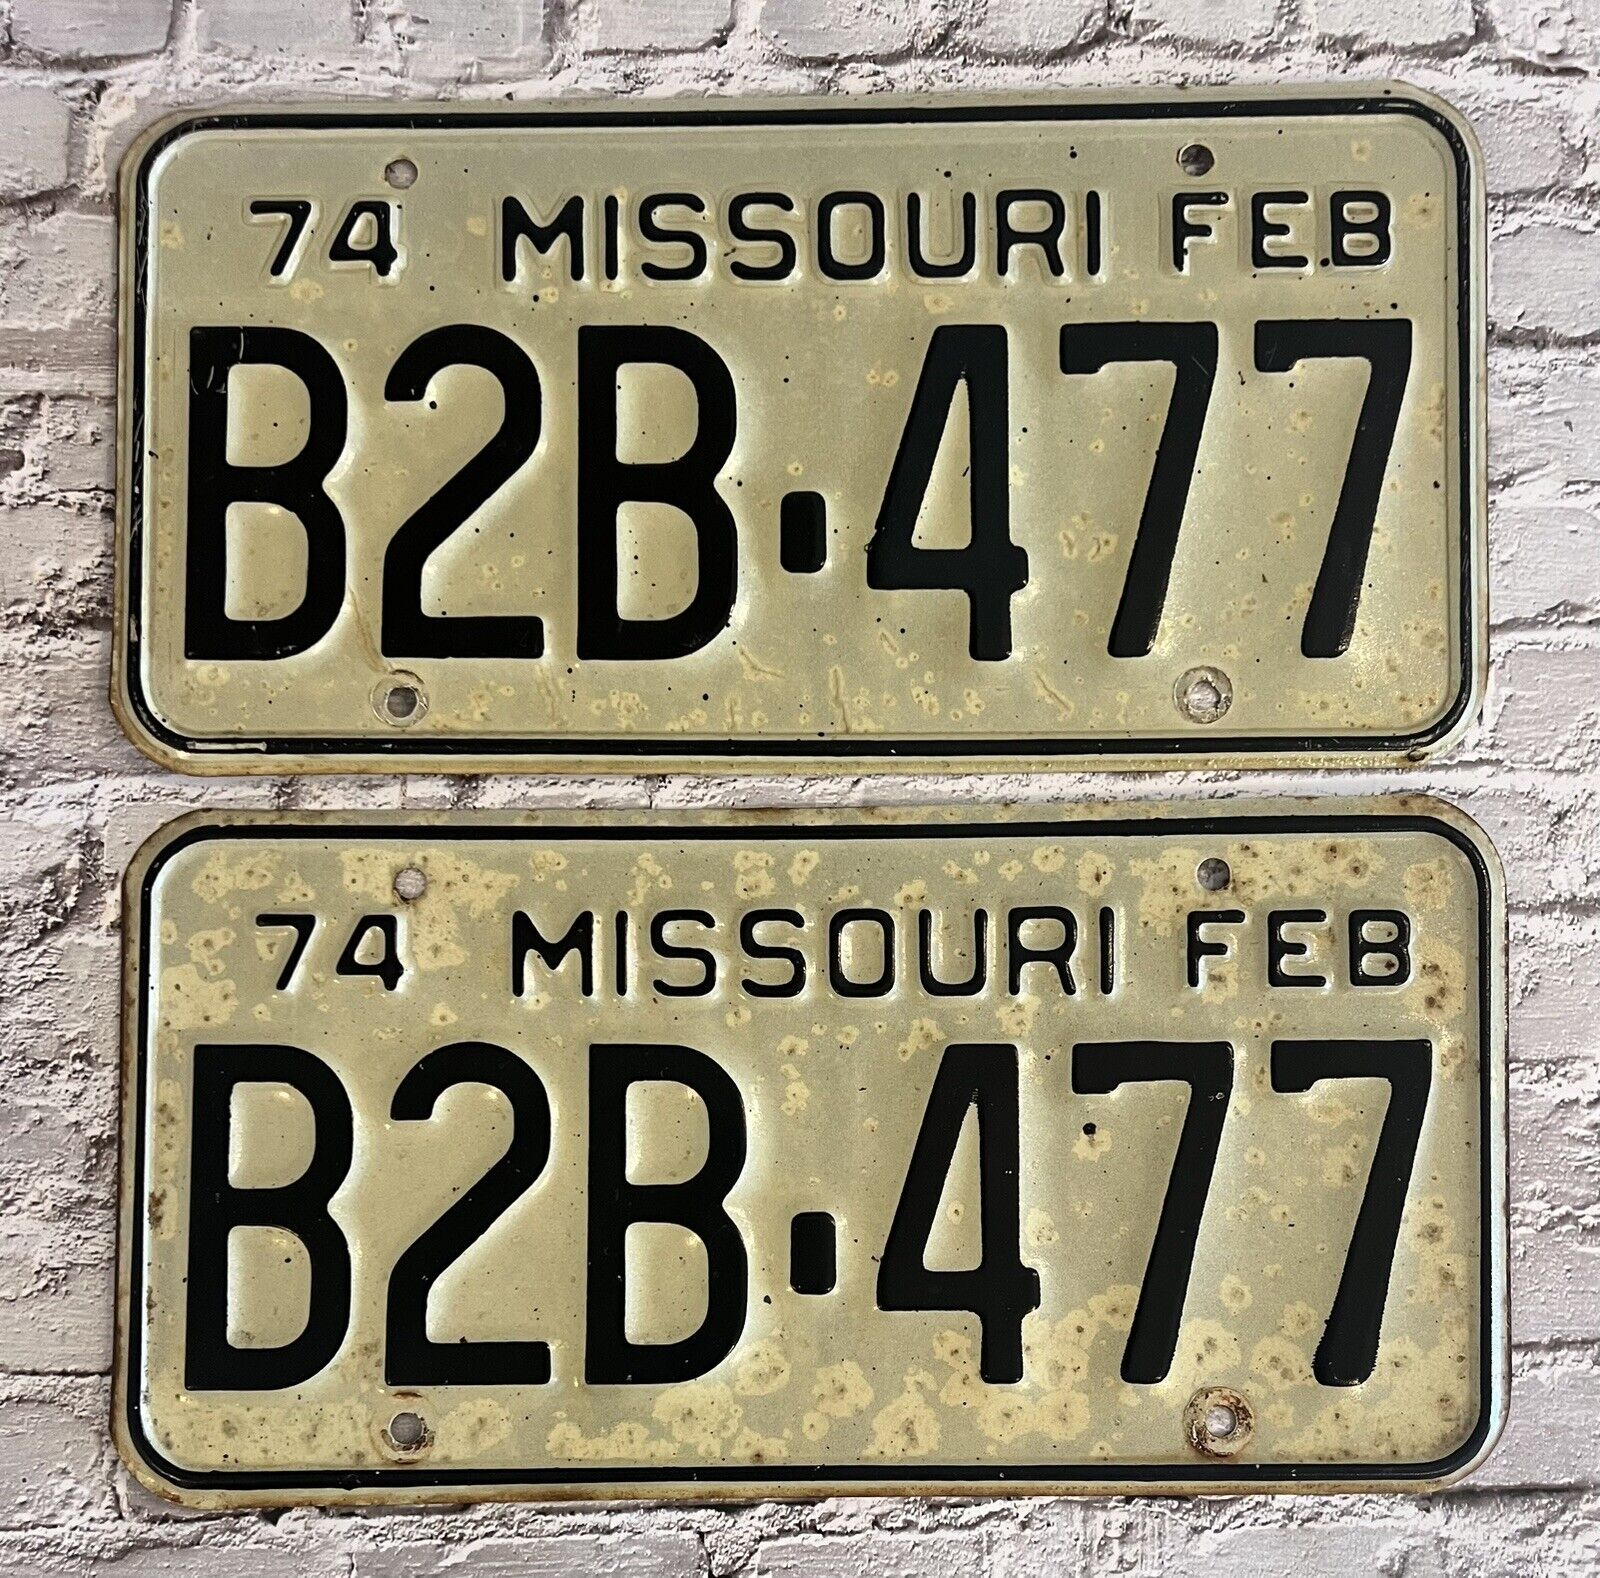 1974 Missouri Automobile License Plate Matched Pair / Set B2B-477